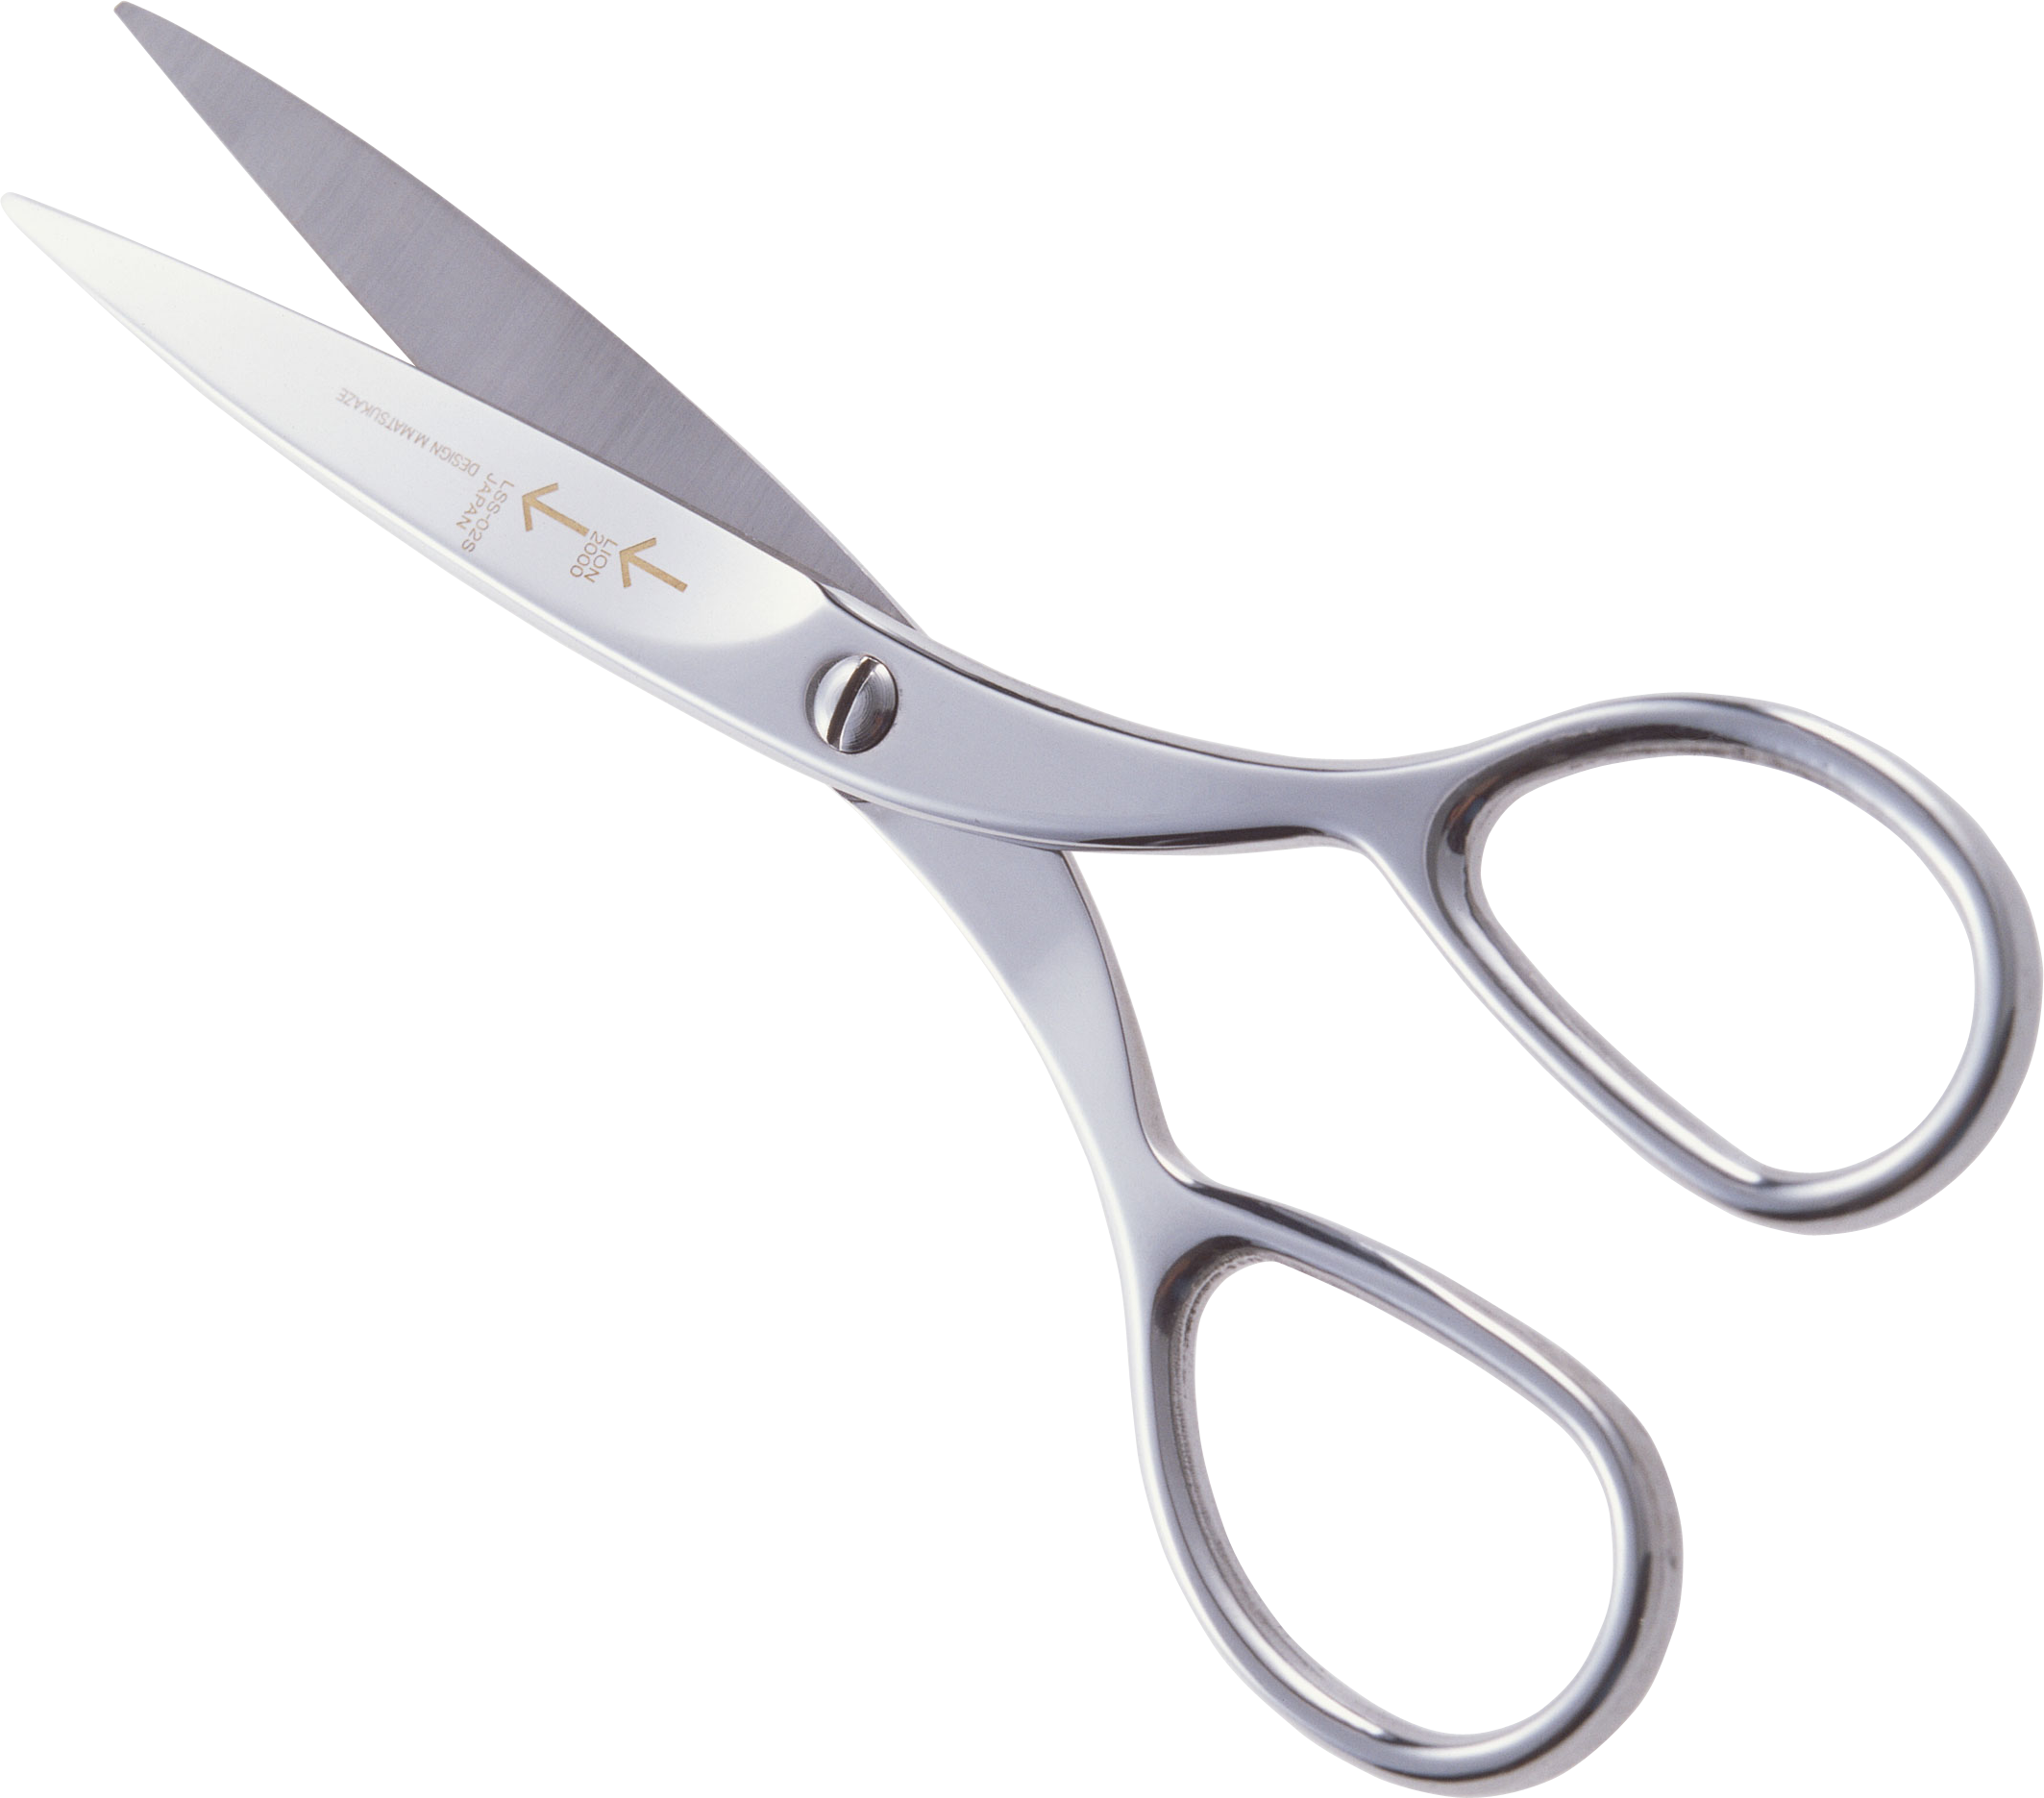 Haircut clipart scissors. Hair png image pinterest